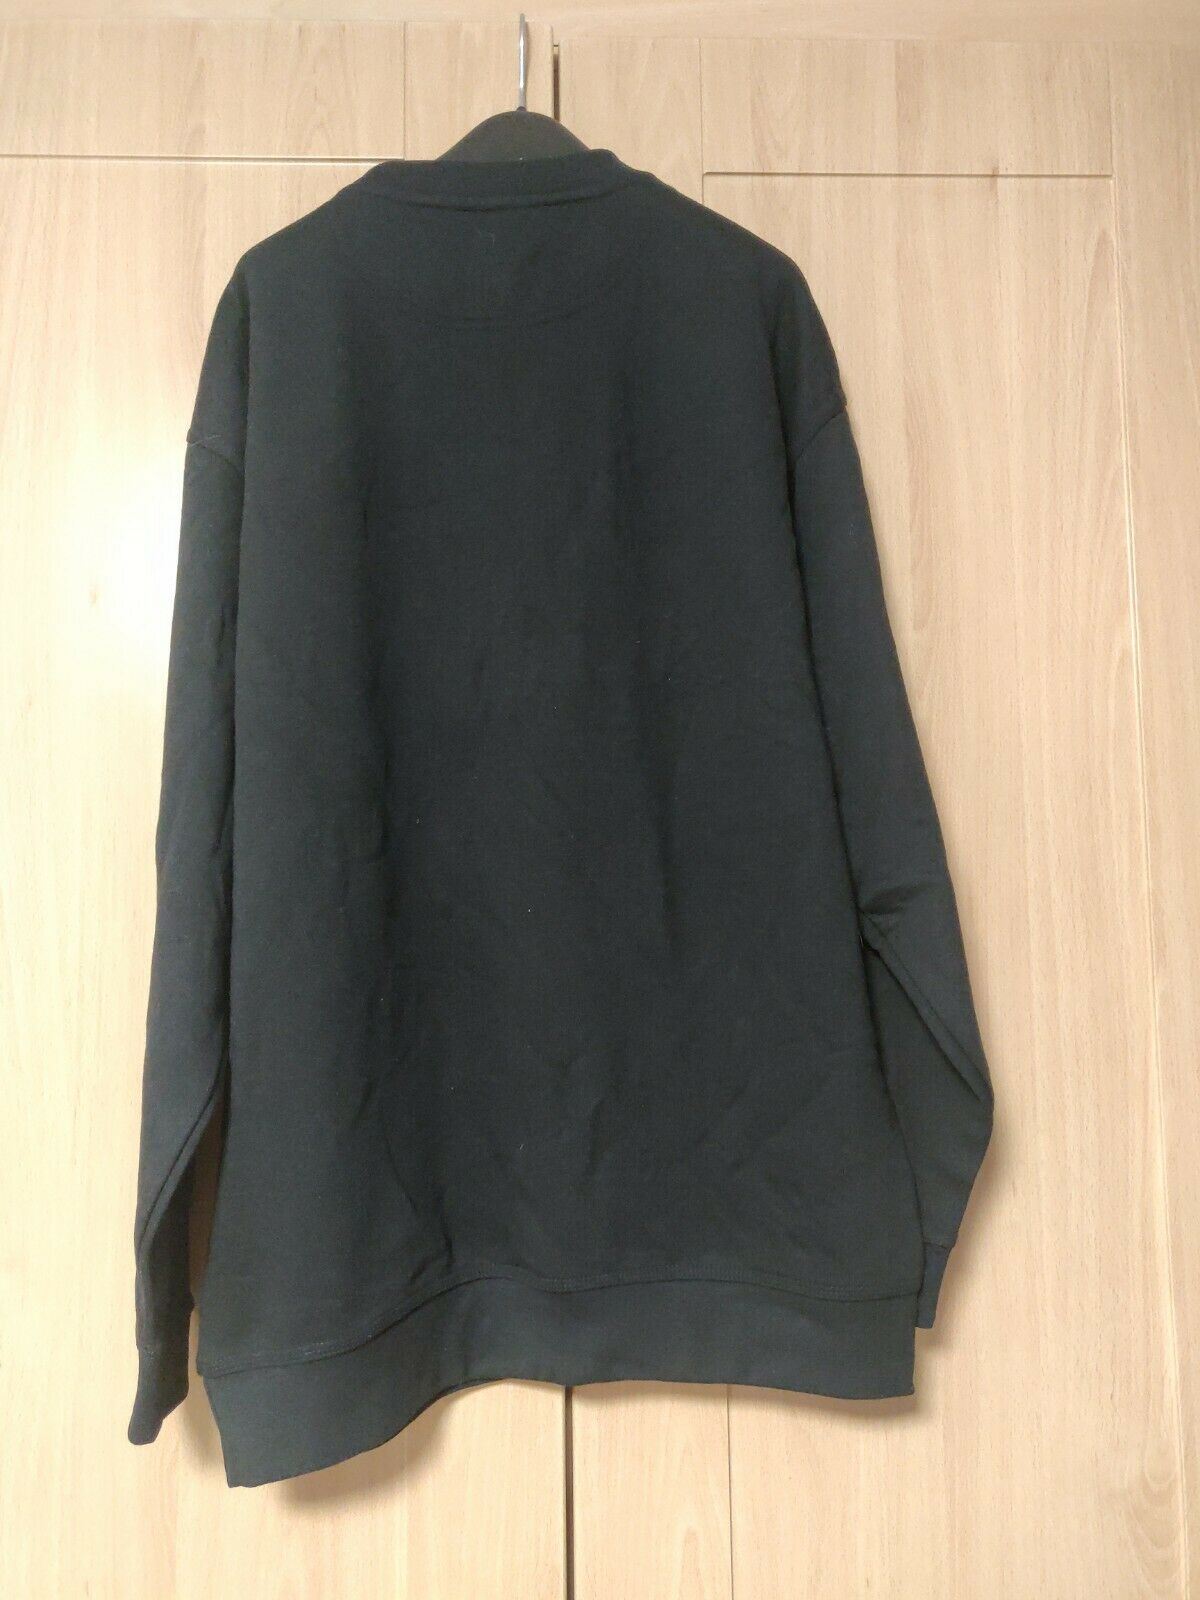 ORN Black Sweatshirt Long Sleeve Jumper Men Size Large